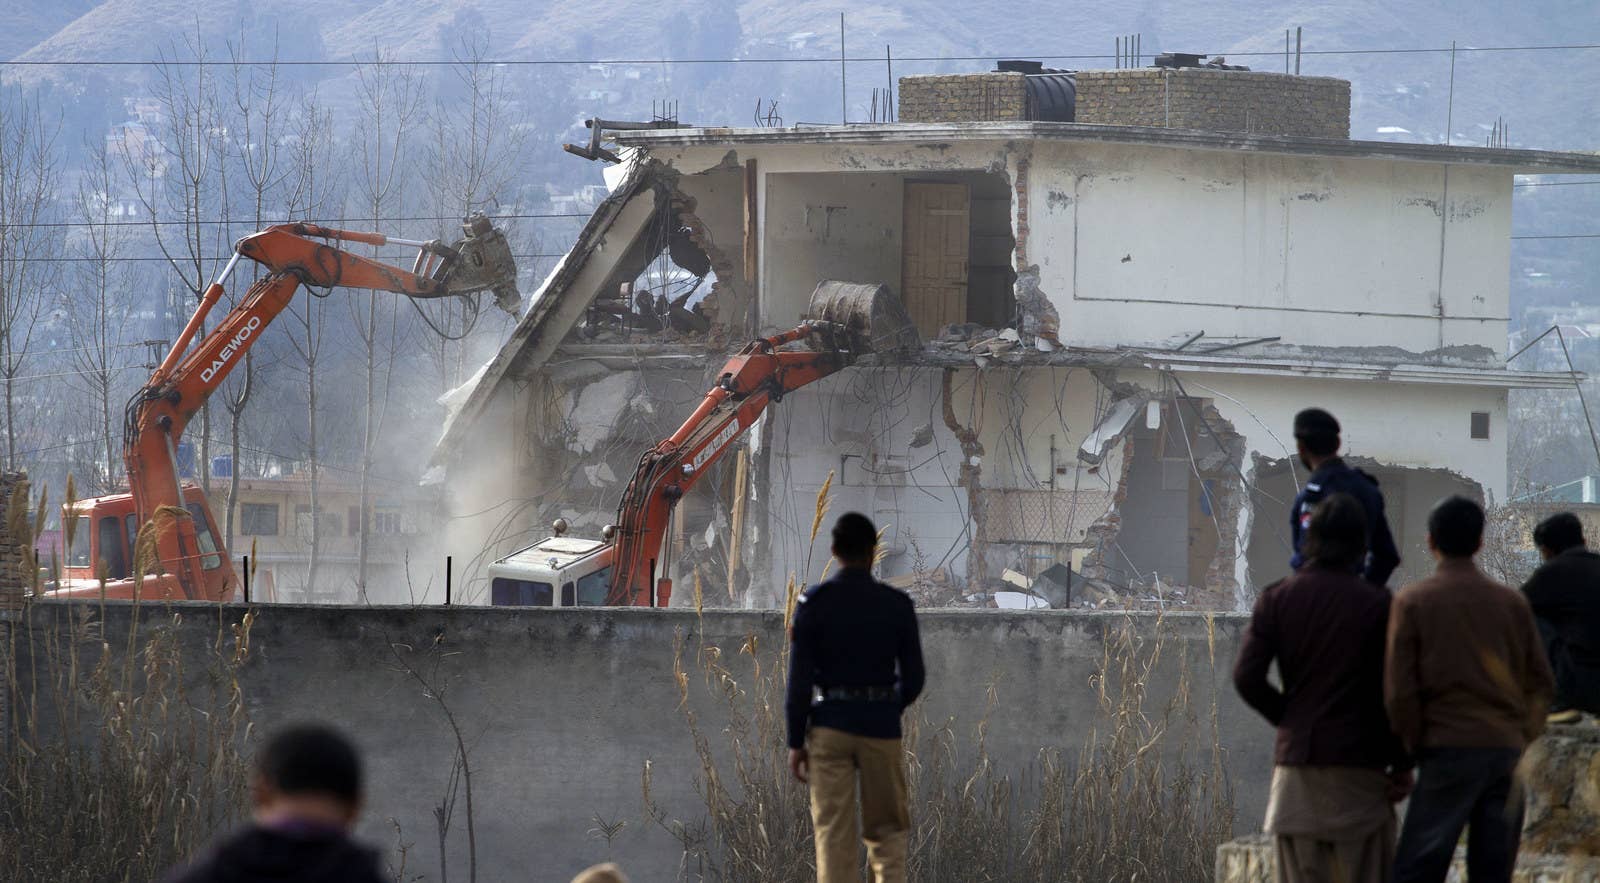 Pakistani authorities use heavy machinery to demolish the compound of Osama bin Laden in Abbottabad, Pakistan.